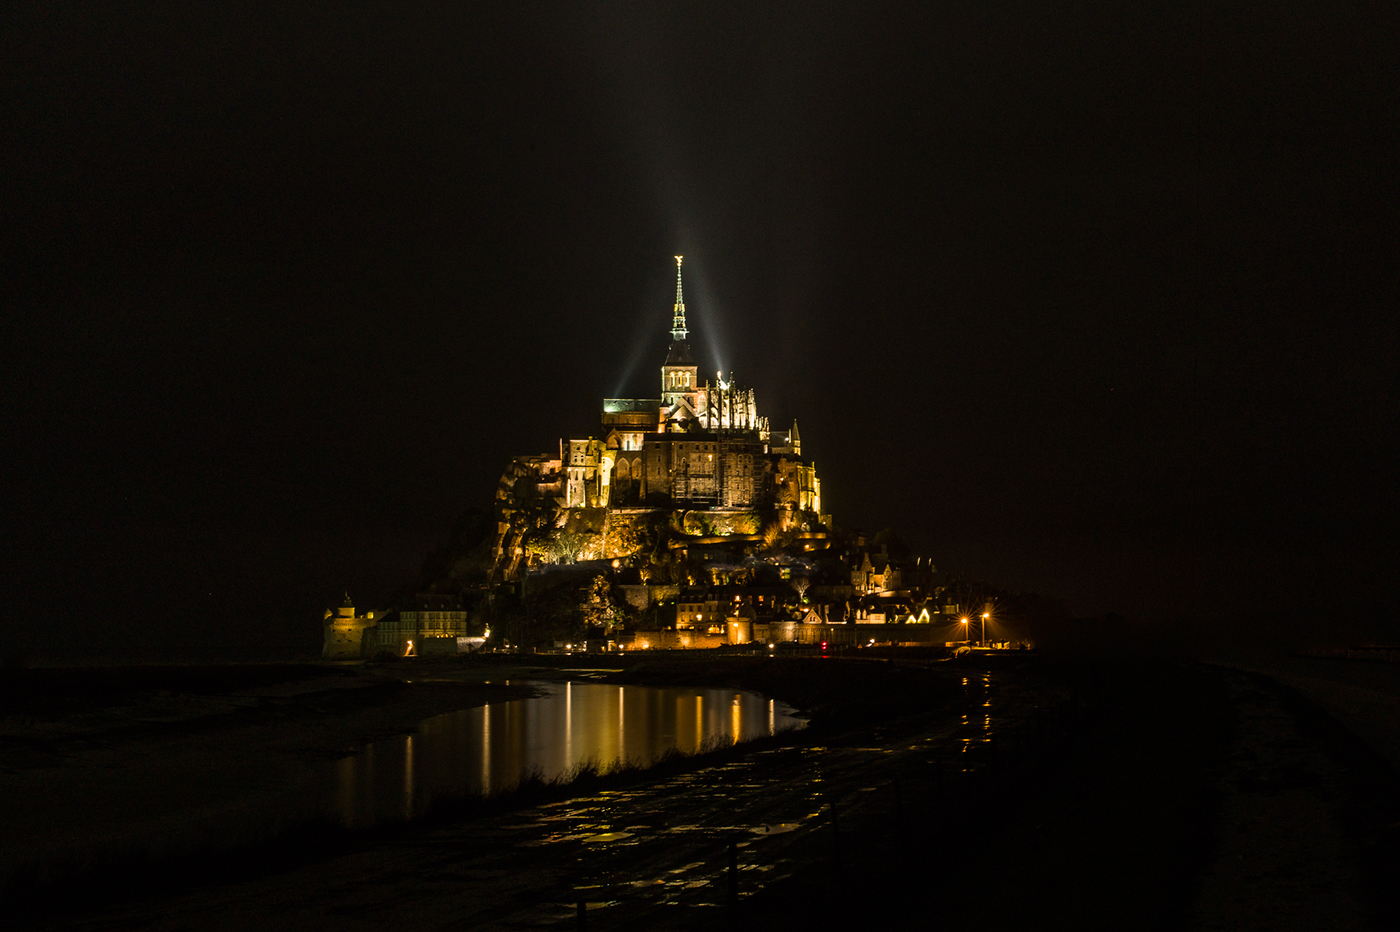 Mont Saint Michel monestary nuns Munks france